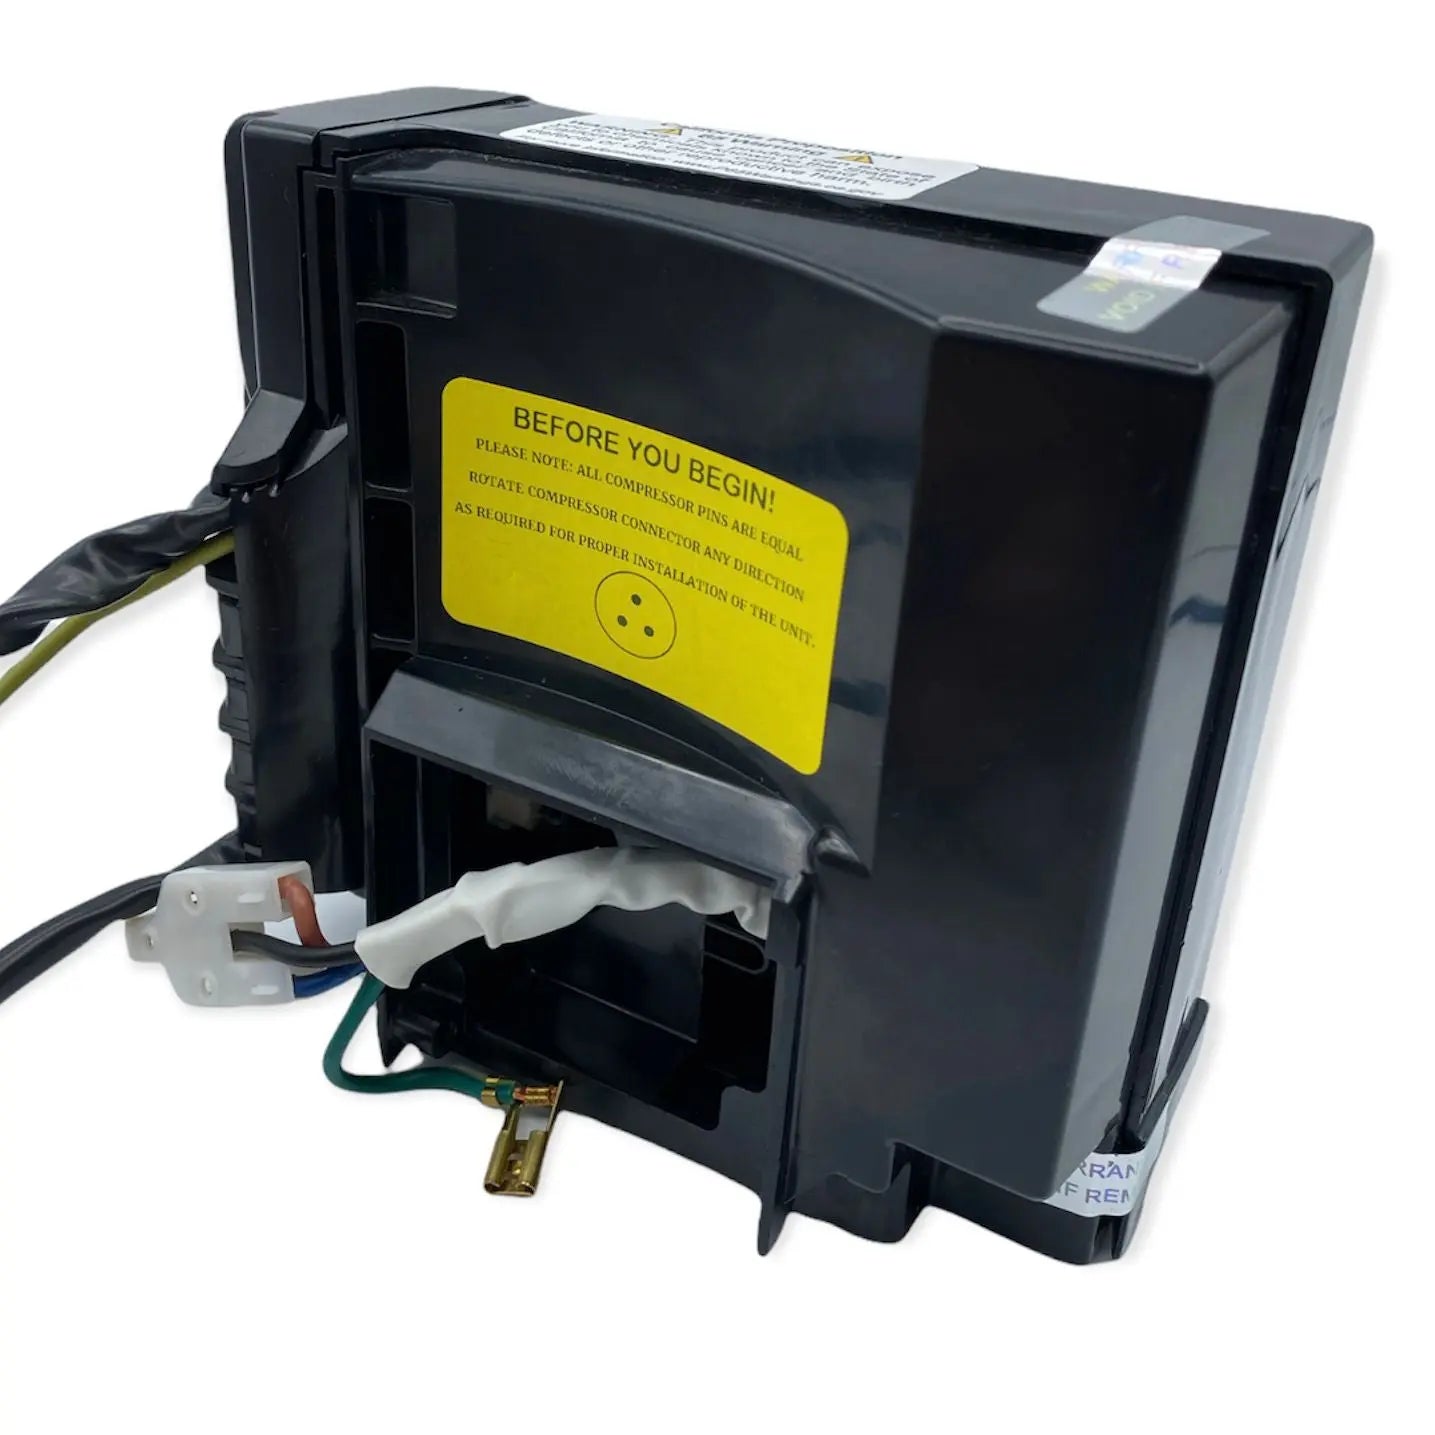 G.E /Haier Refrigerator Inverter Board Kit - 200D5948P008-115V,  REPLACES: 200D5948P007  519306092 INVERTEC